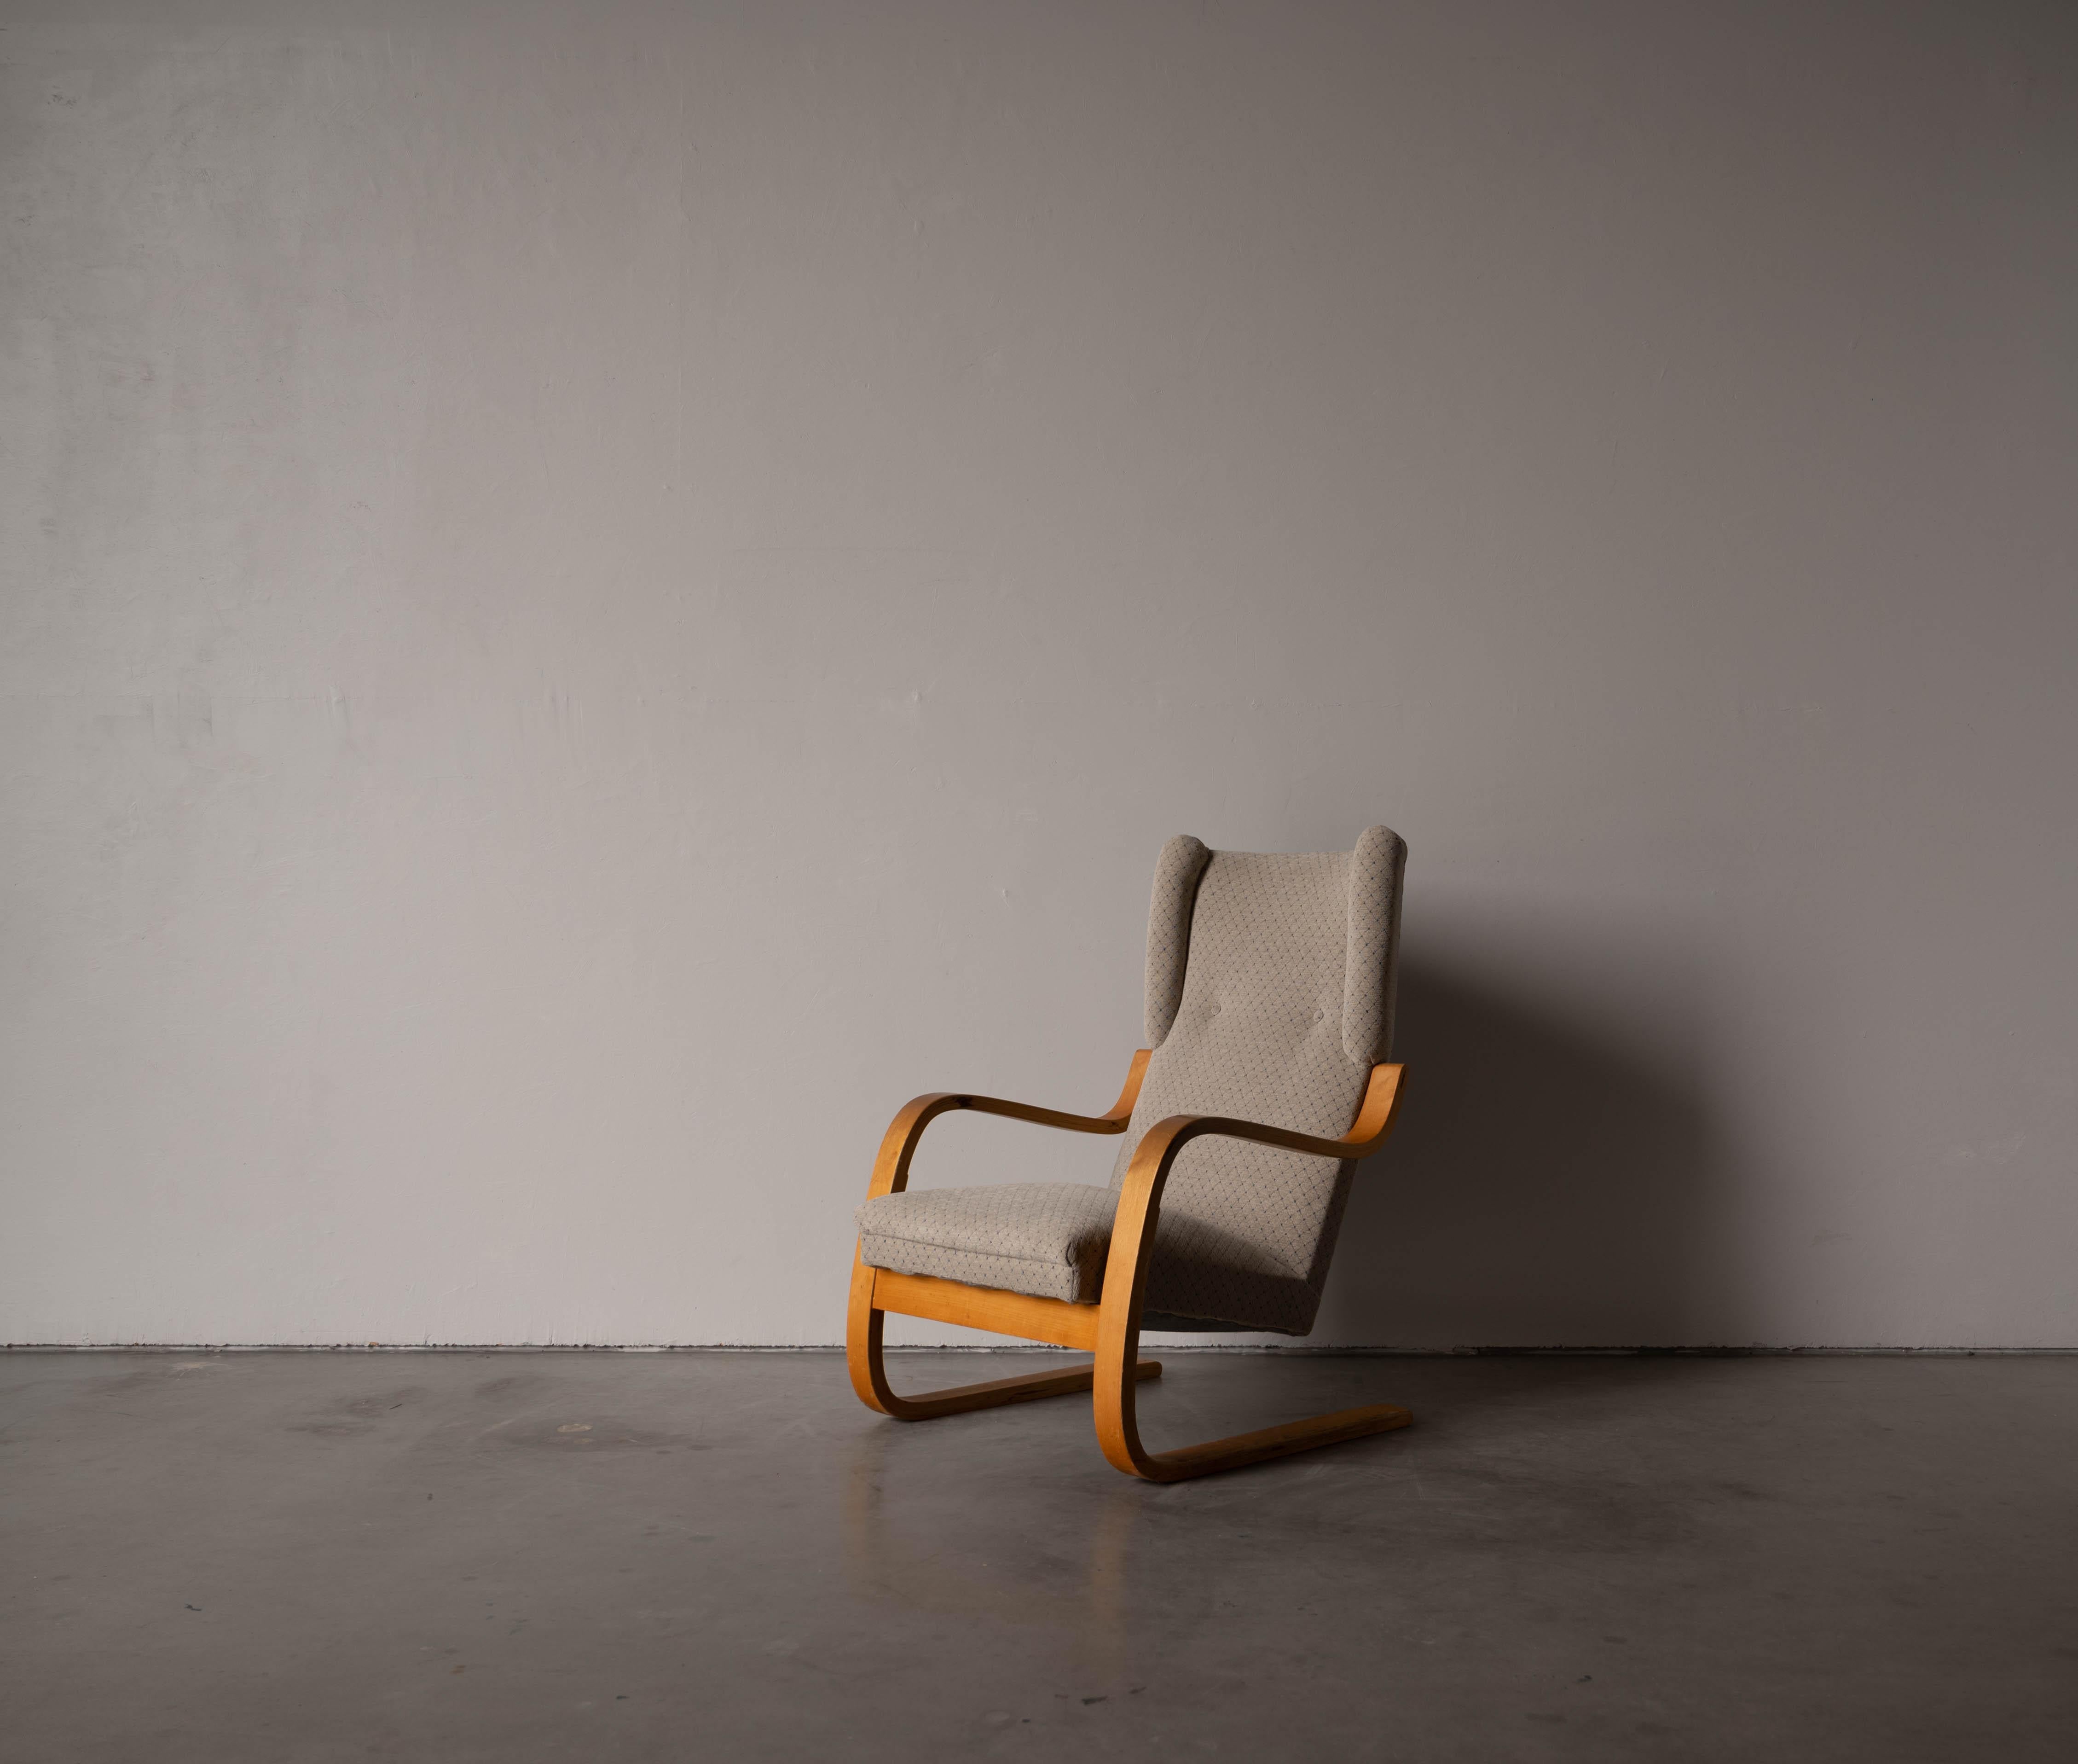 Finnish Alvar Aalto, Lounge Chair, Birch, Fabric, Artek, Finland, c. 1970s